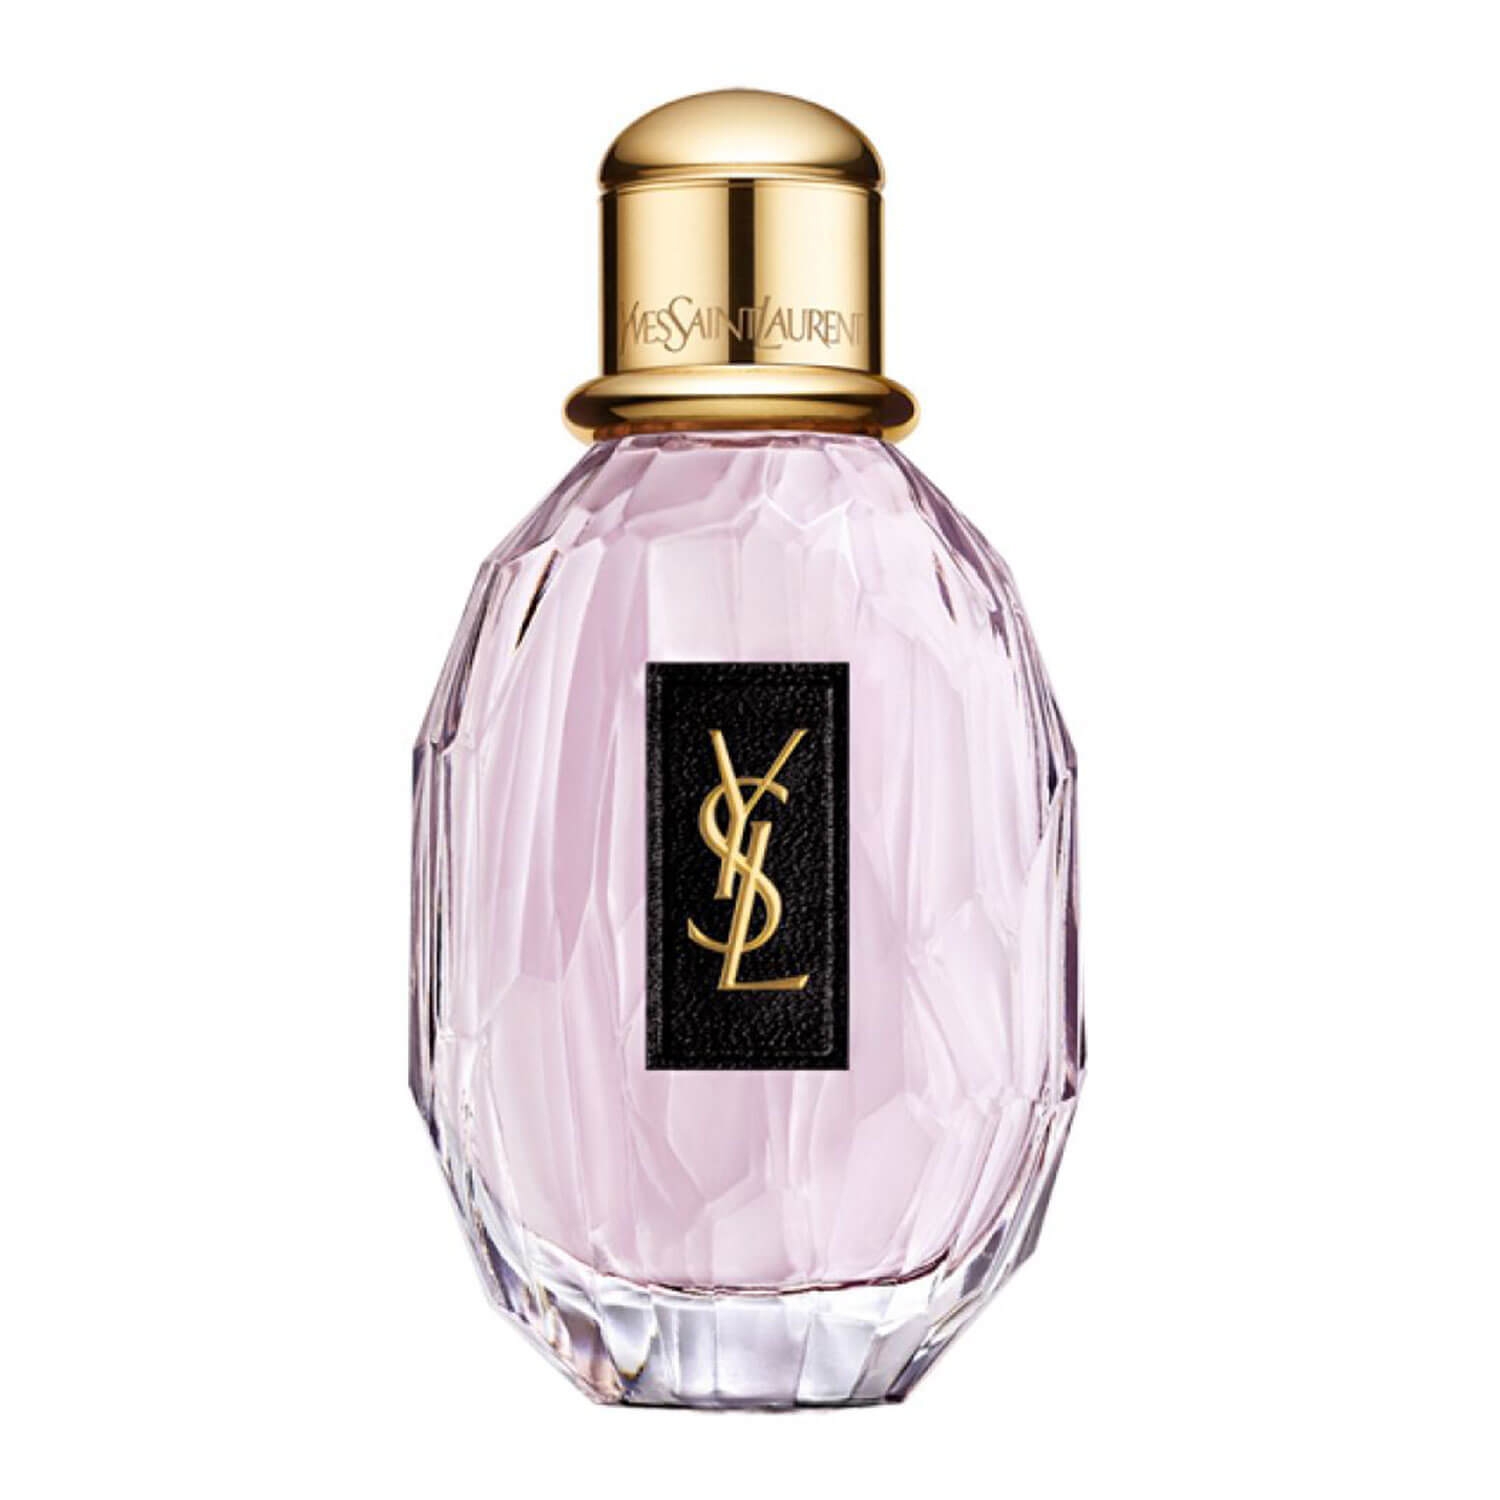 Produktbild von Parisienne - Eau de Parfum